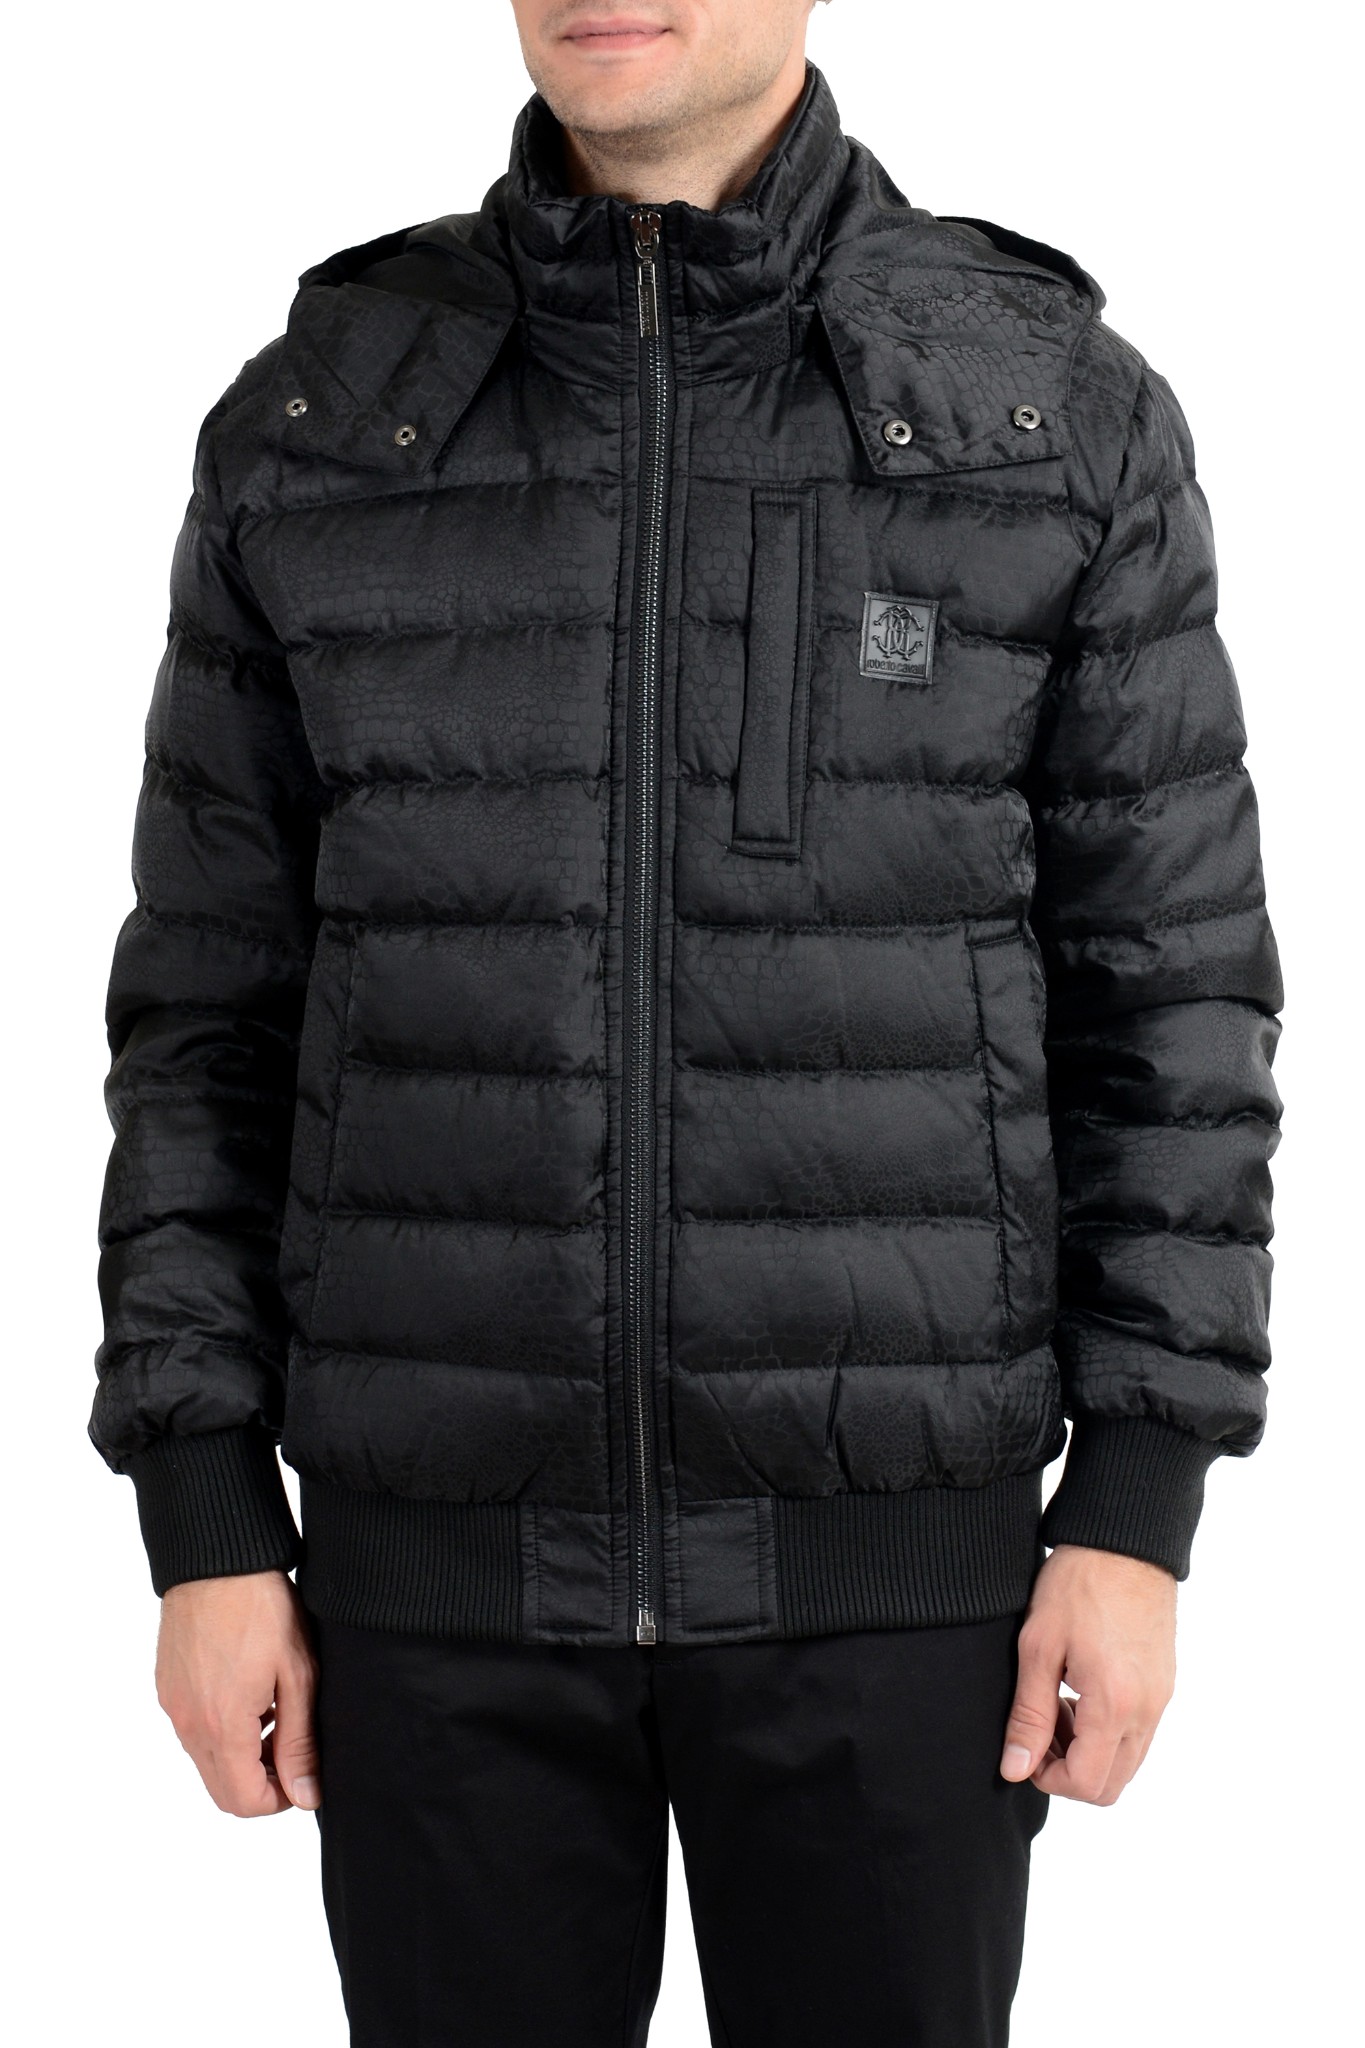 Roberto Cavalli Men's Down Black Full Zip Parka Hooded Jacket | eBay